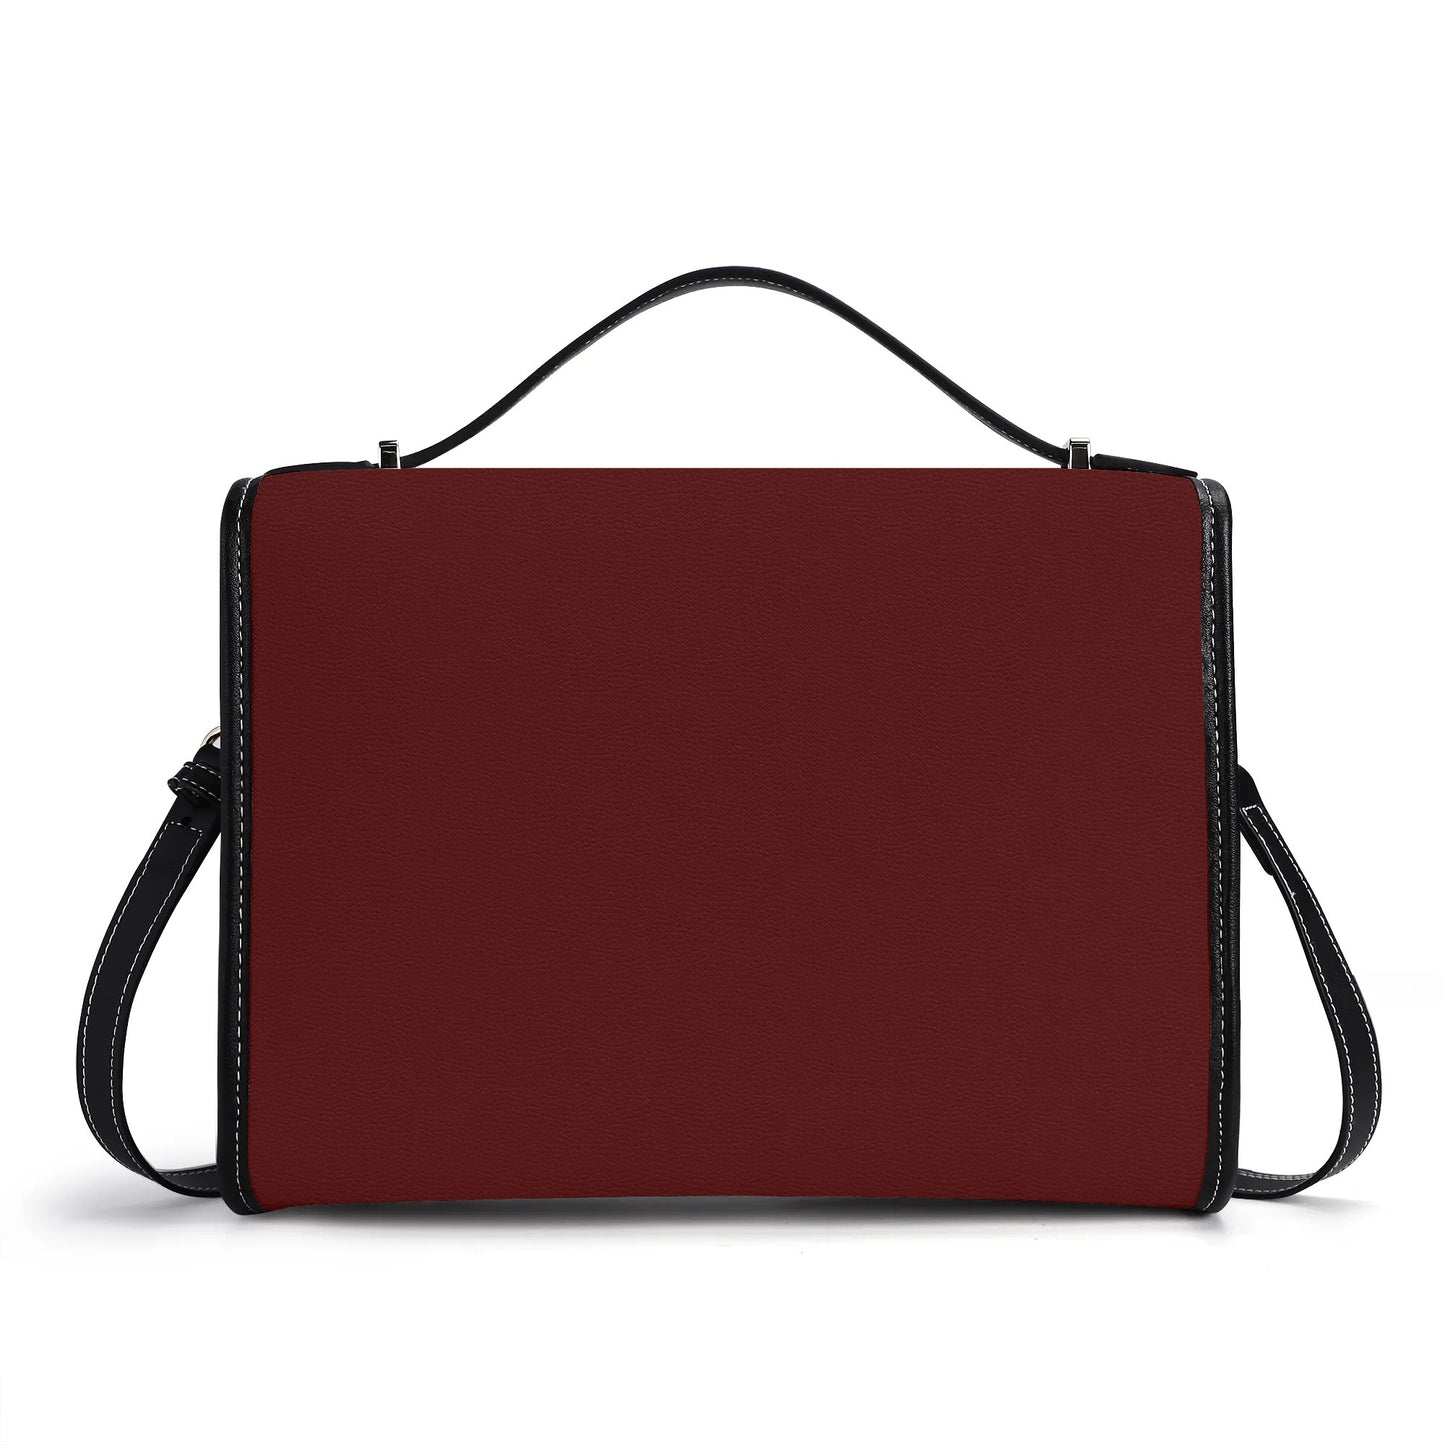 Burgundy Leather Satchel Bag